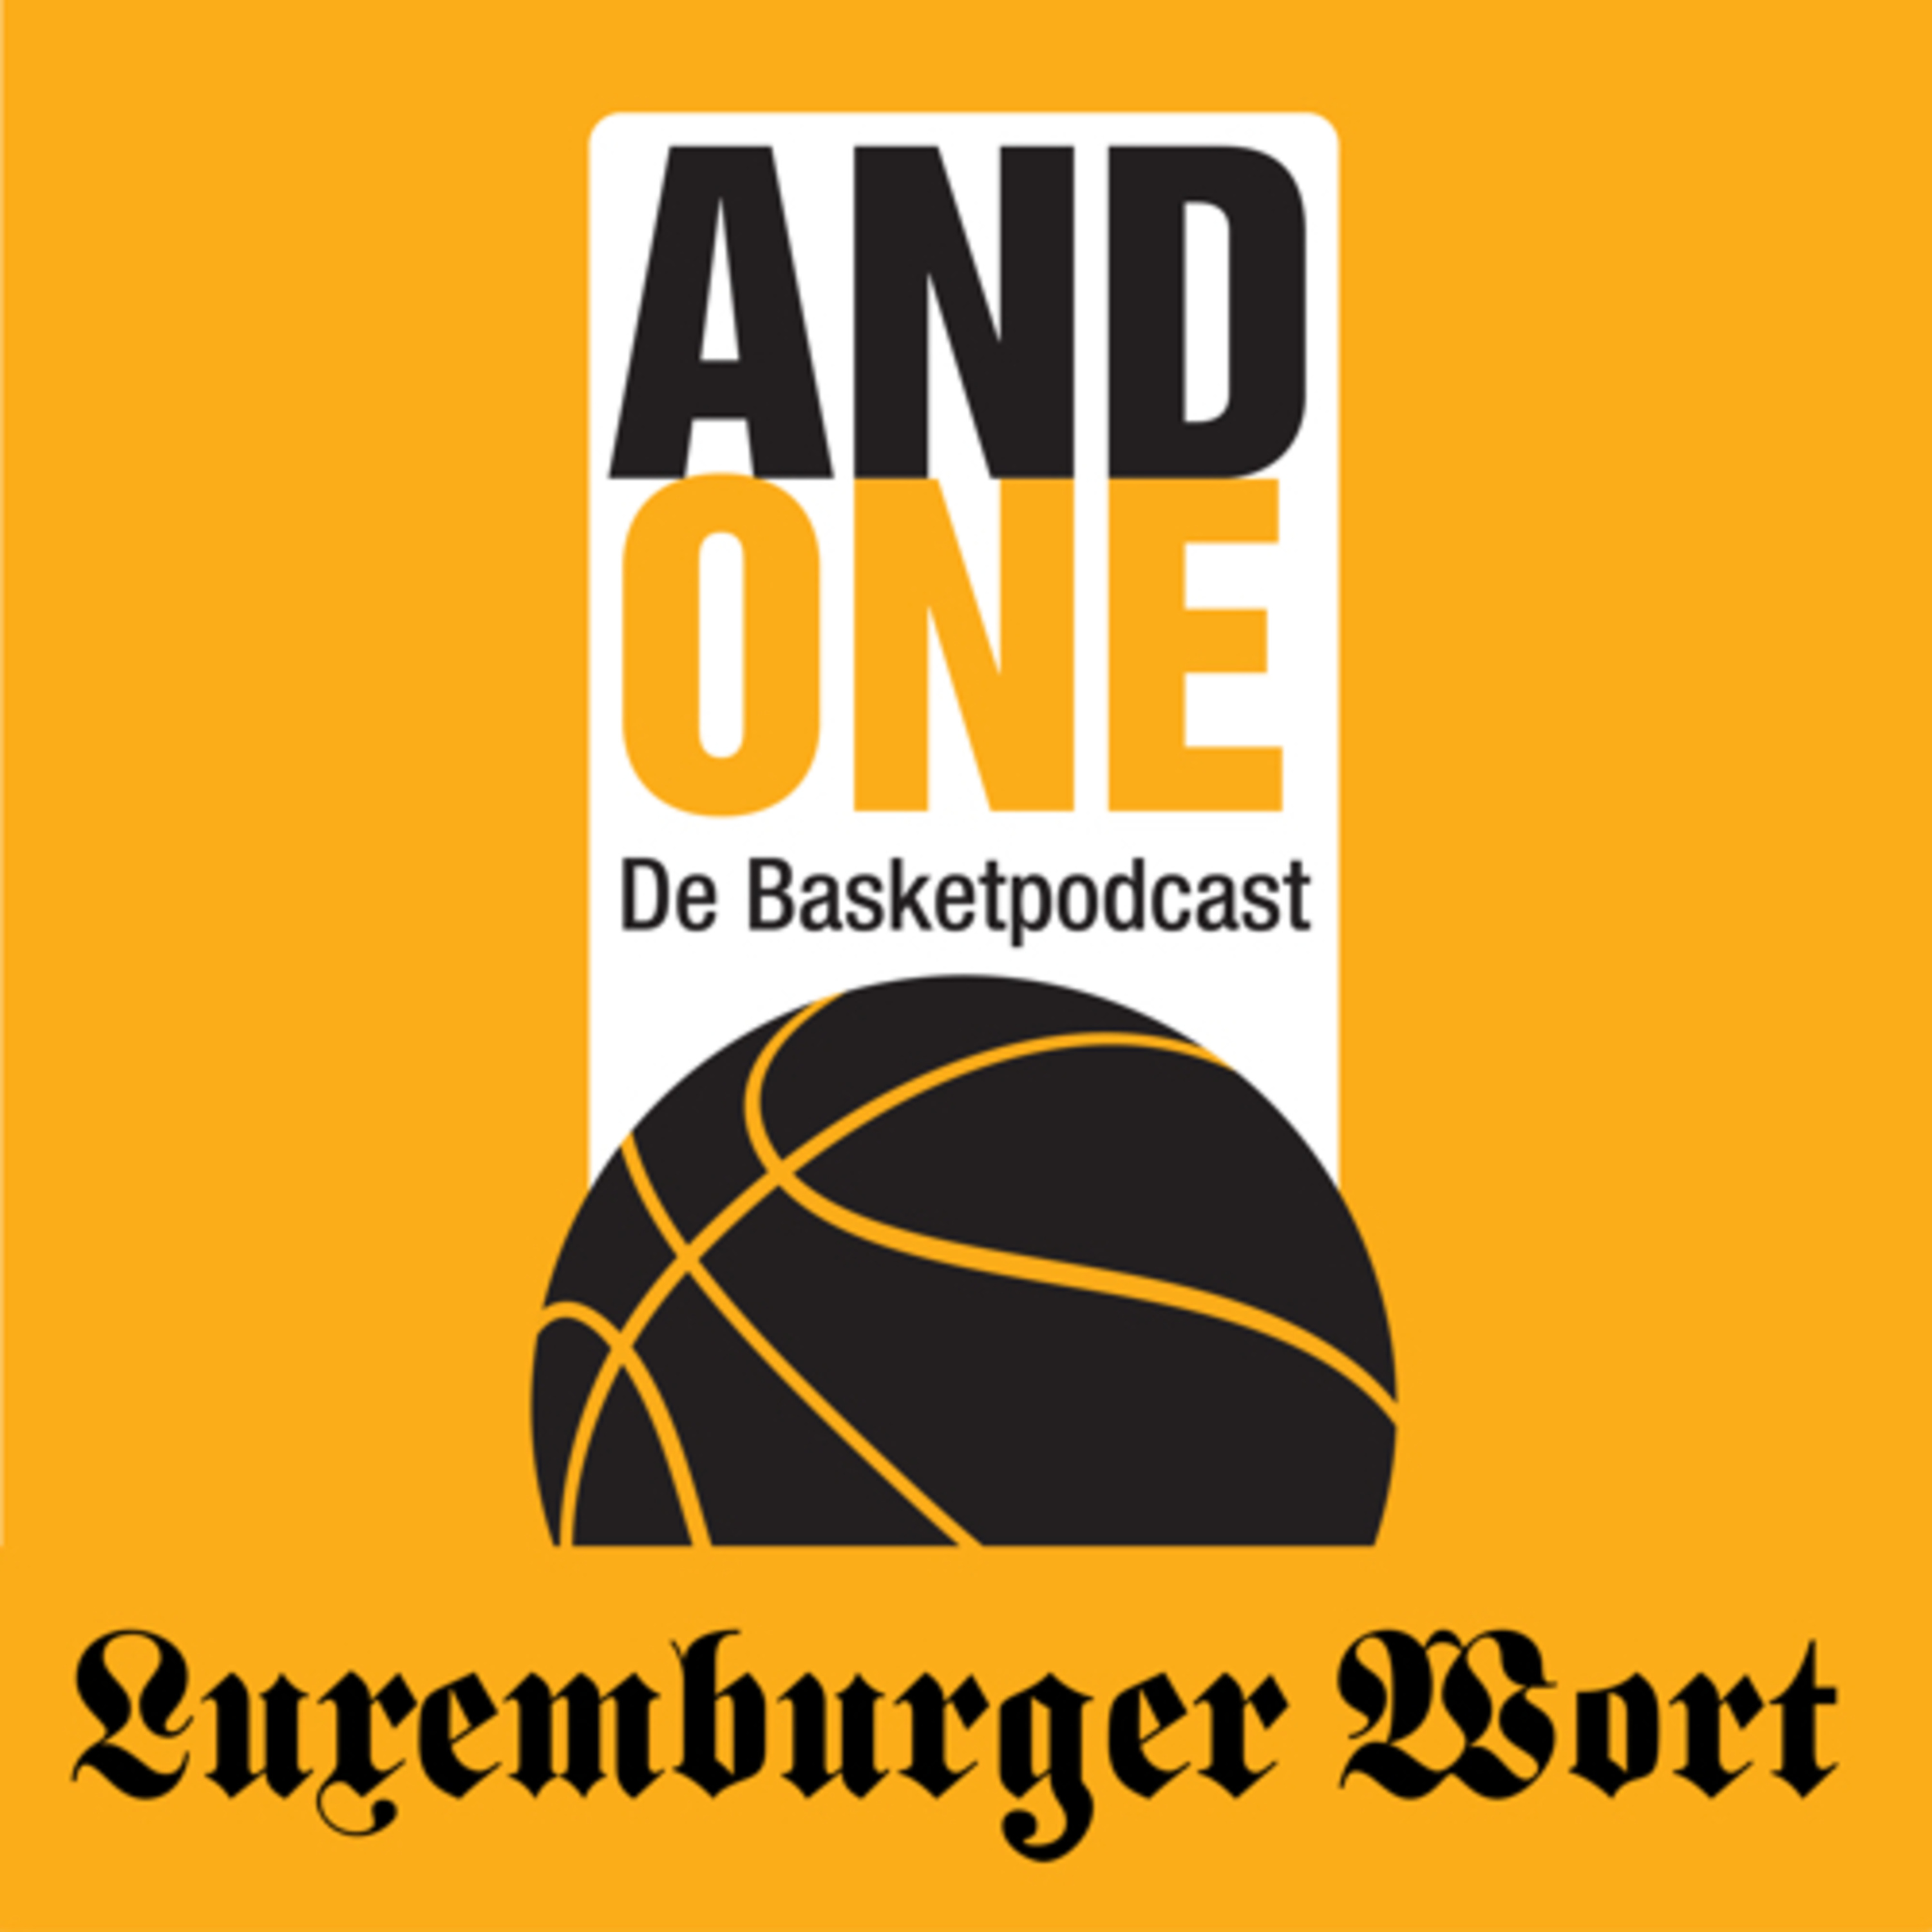 And One - De Basketpodcast